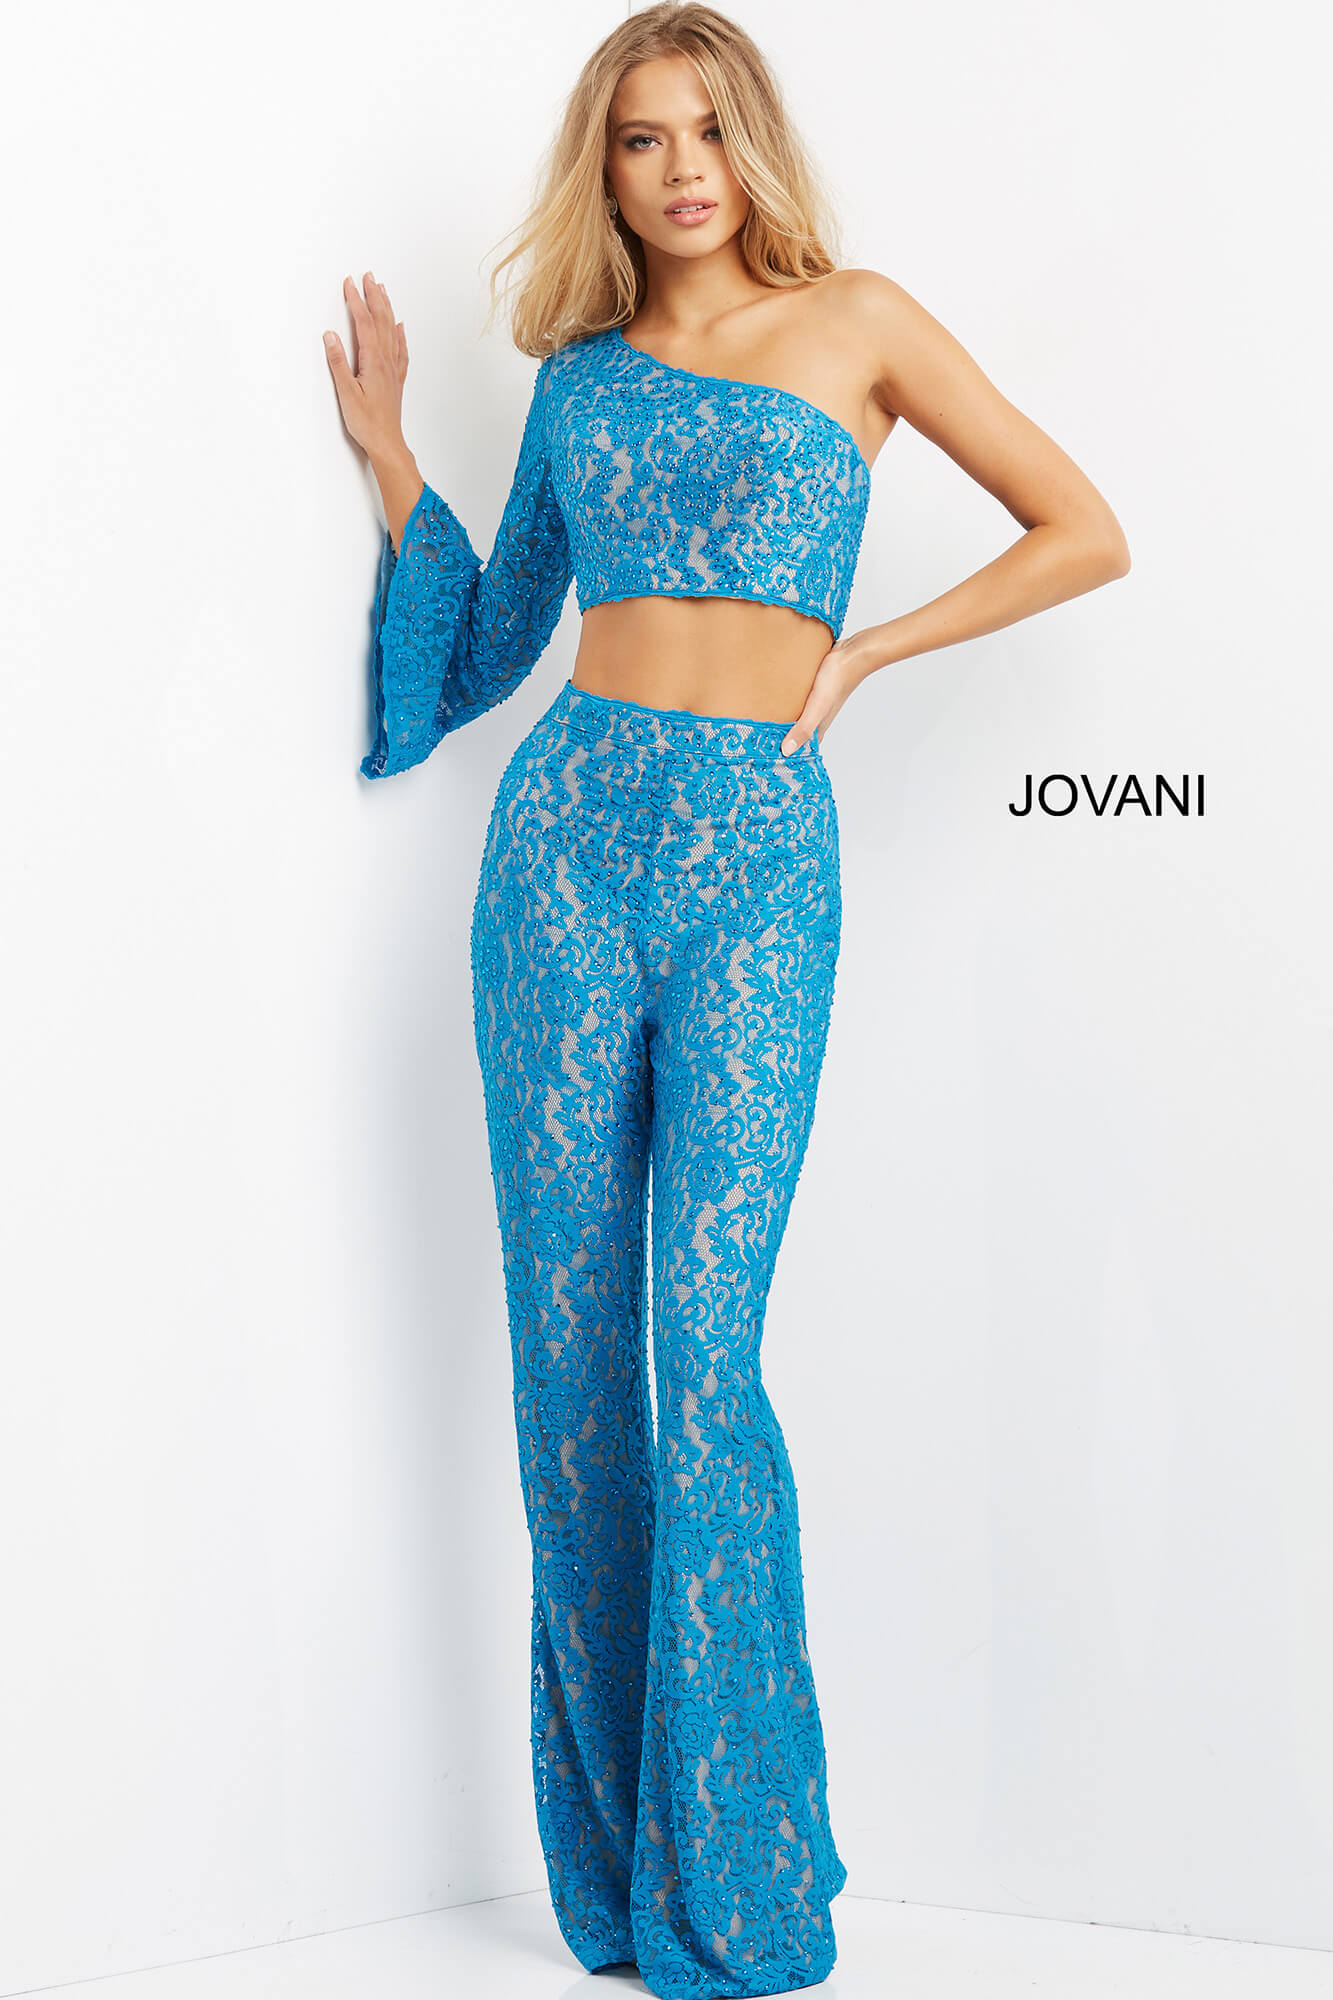 Jovani 08693 Royal Two Piece Lace Contemporary Jumpsuit